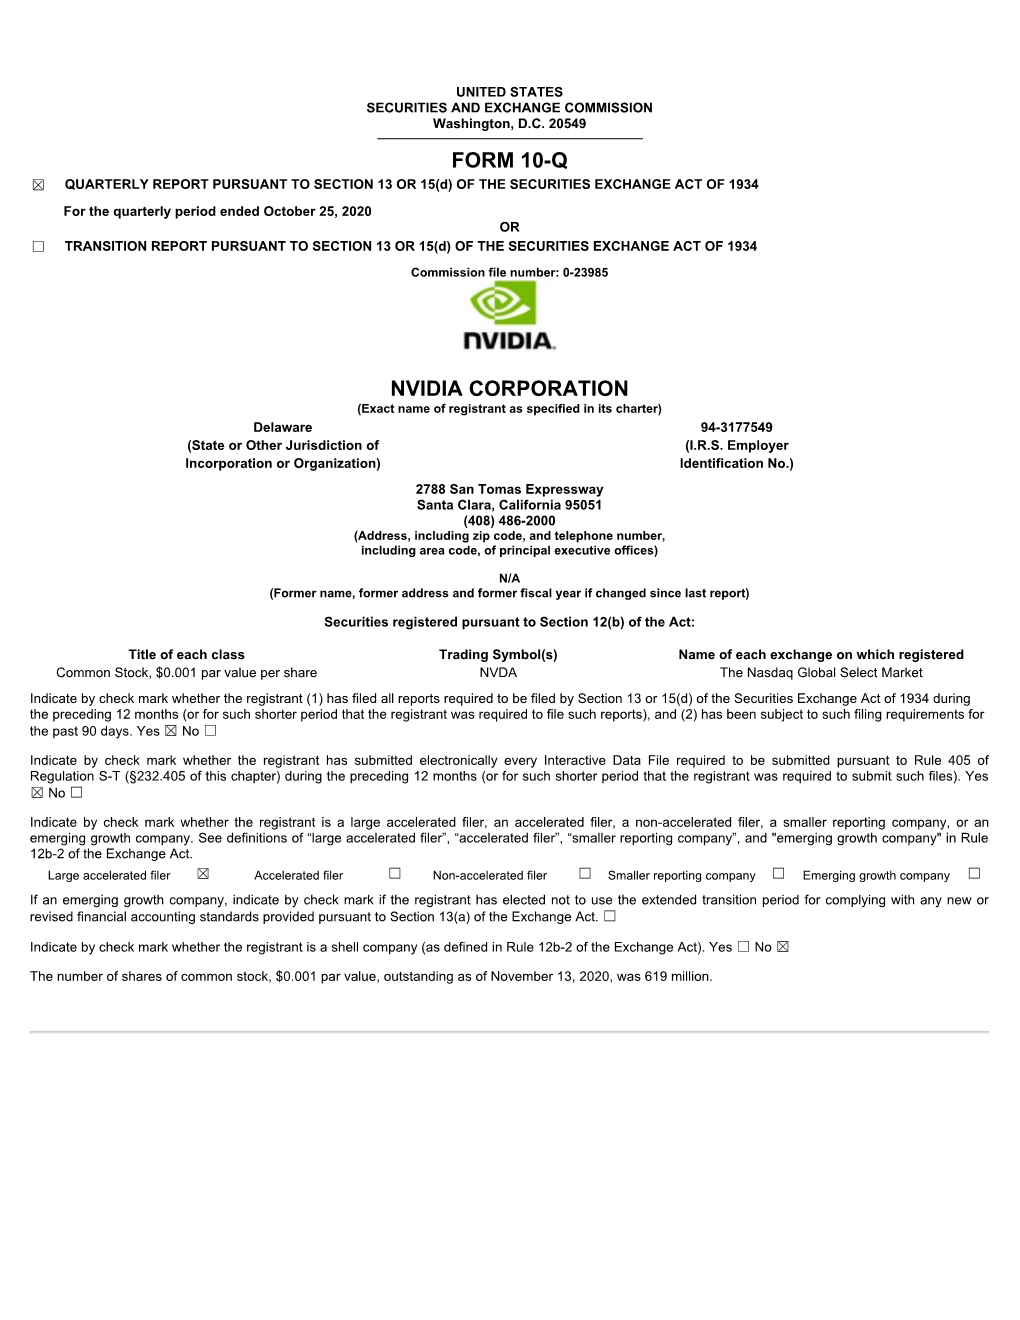 Form 10-Q Nvidia Corporation